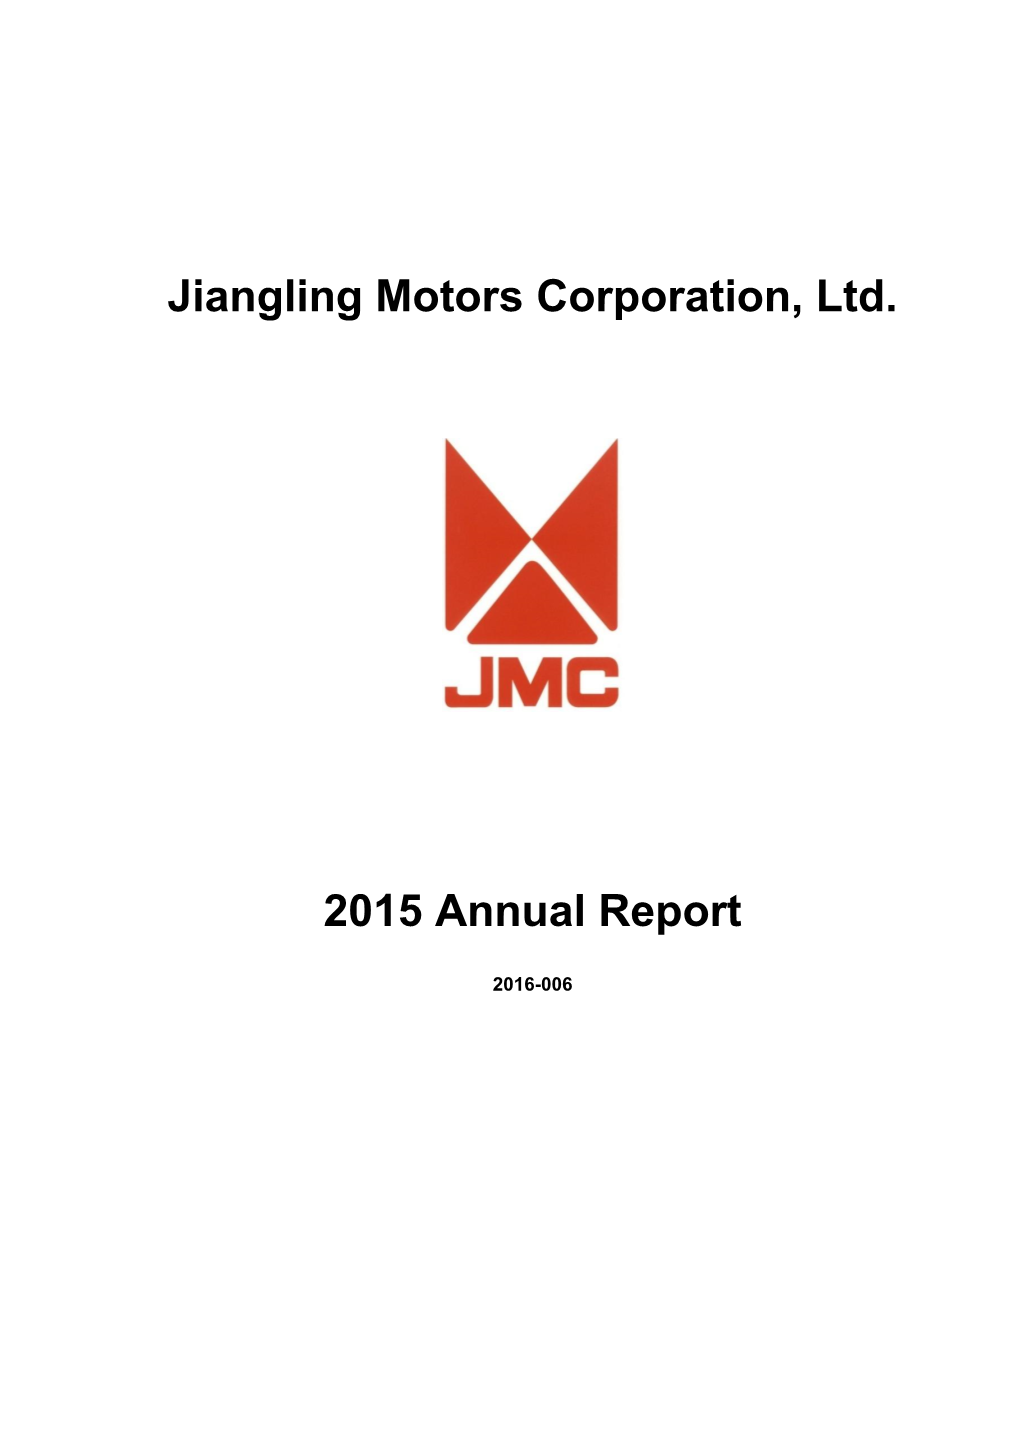 Jiangling Motors Corporation, Ltd. 2015 Annual Report